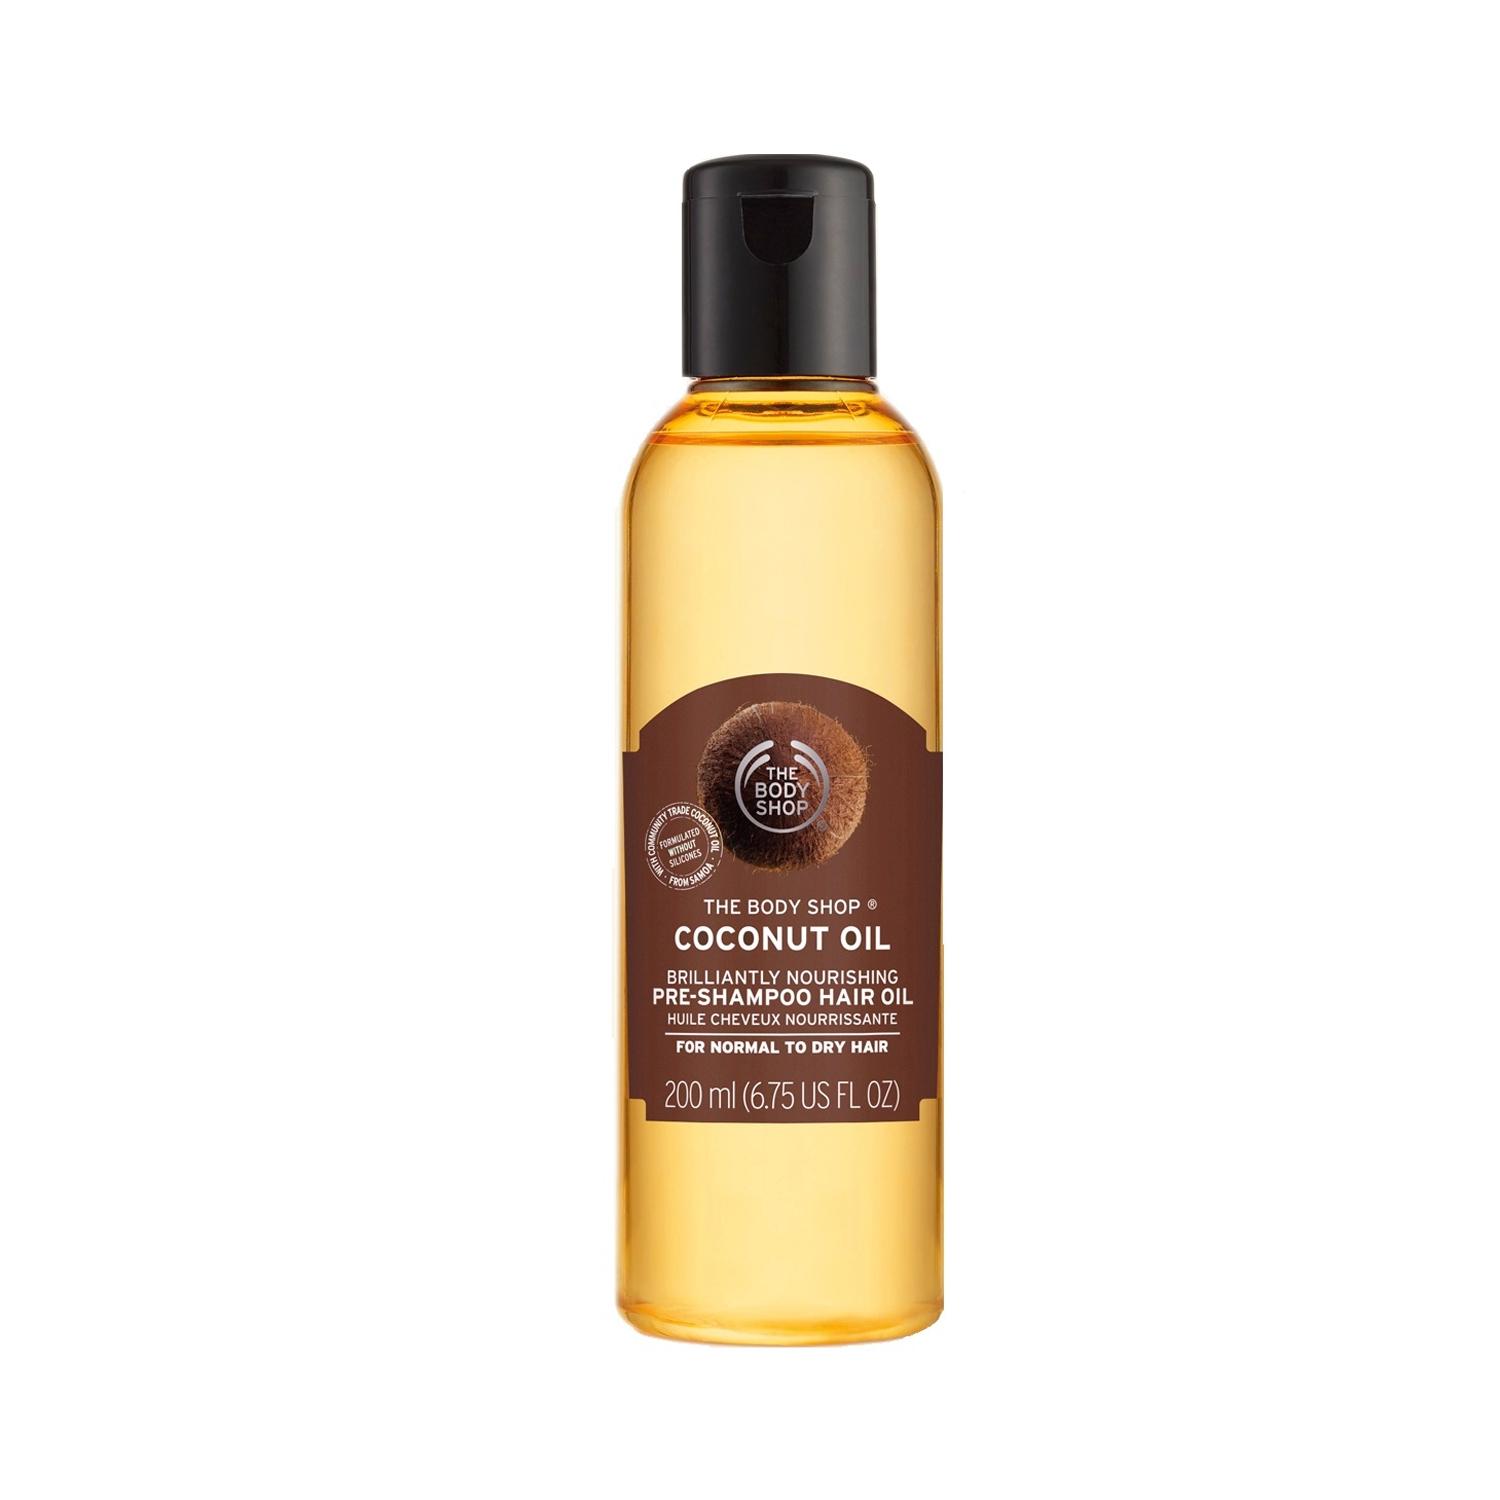 the-body-shop-coconut-oil-brilliantly-nourishing-pre-shampoo-hair-oil-(200ml)